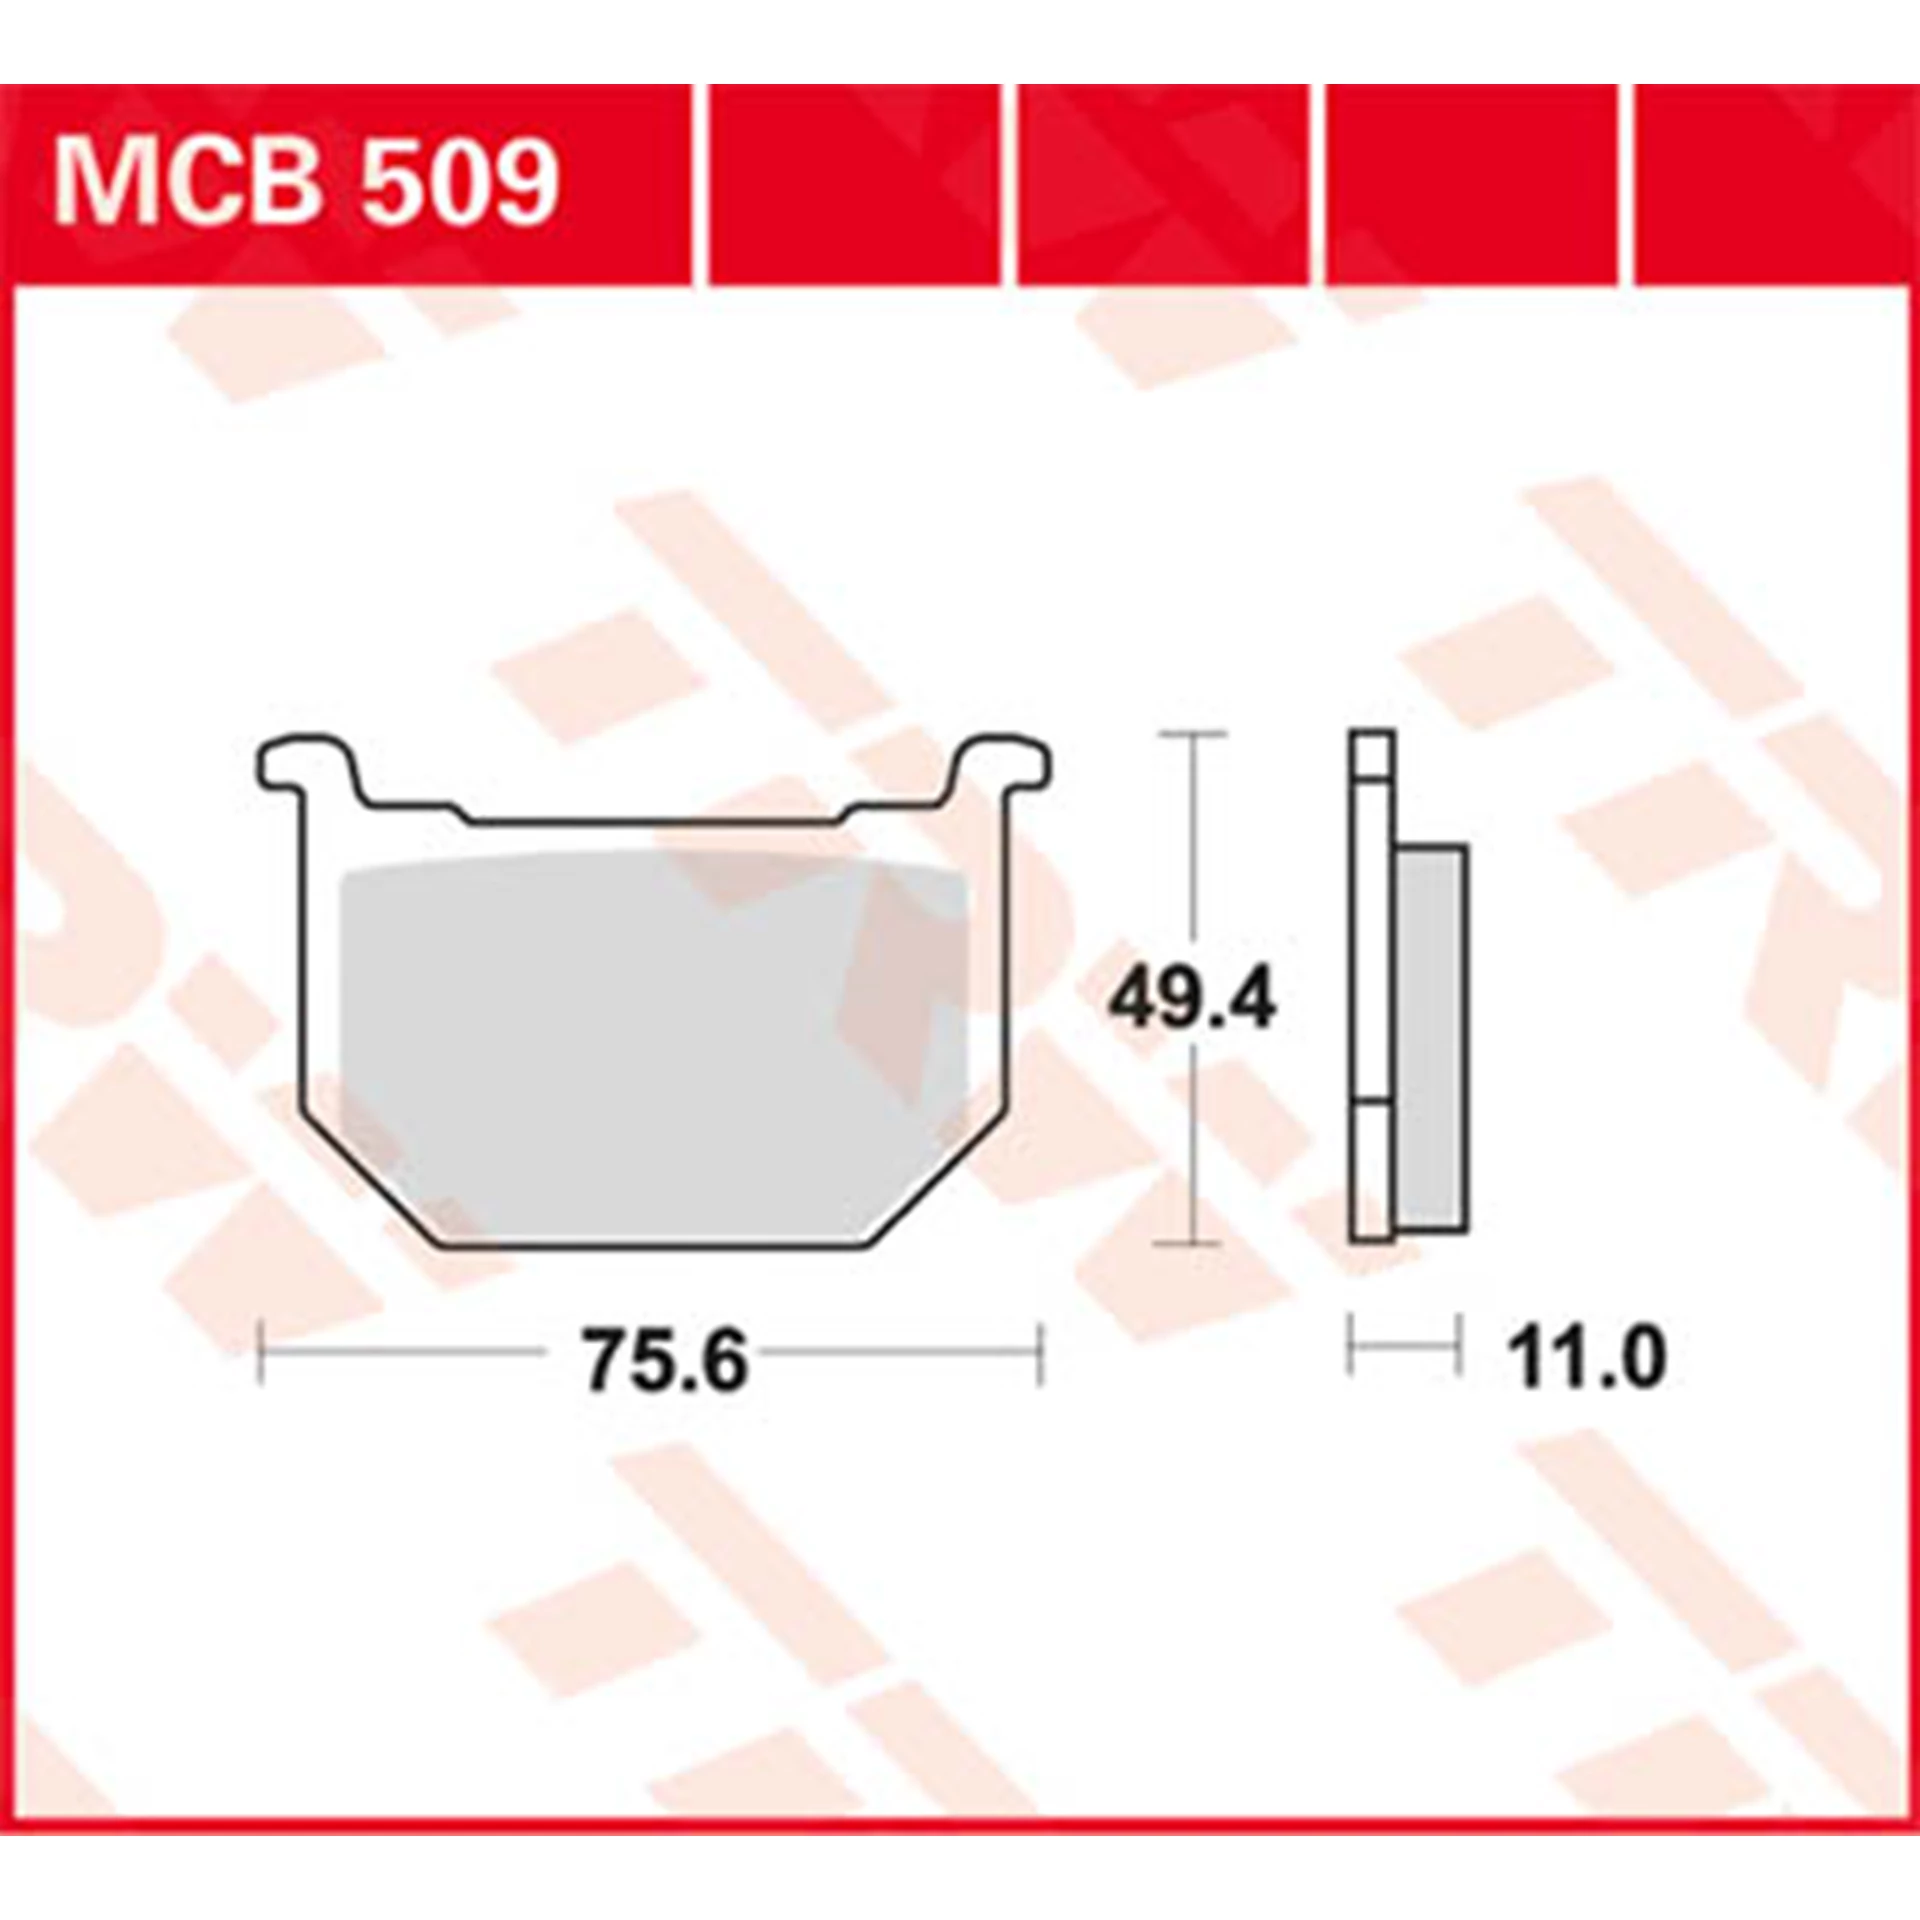 MCB509.jpg